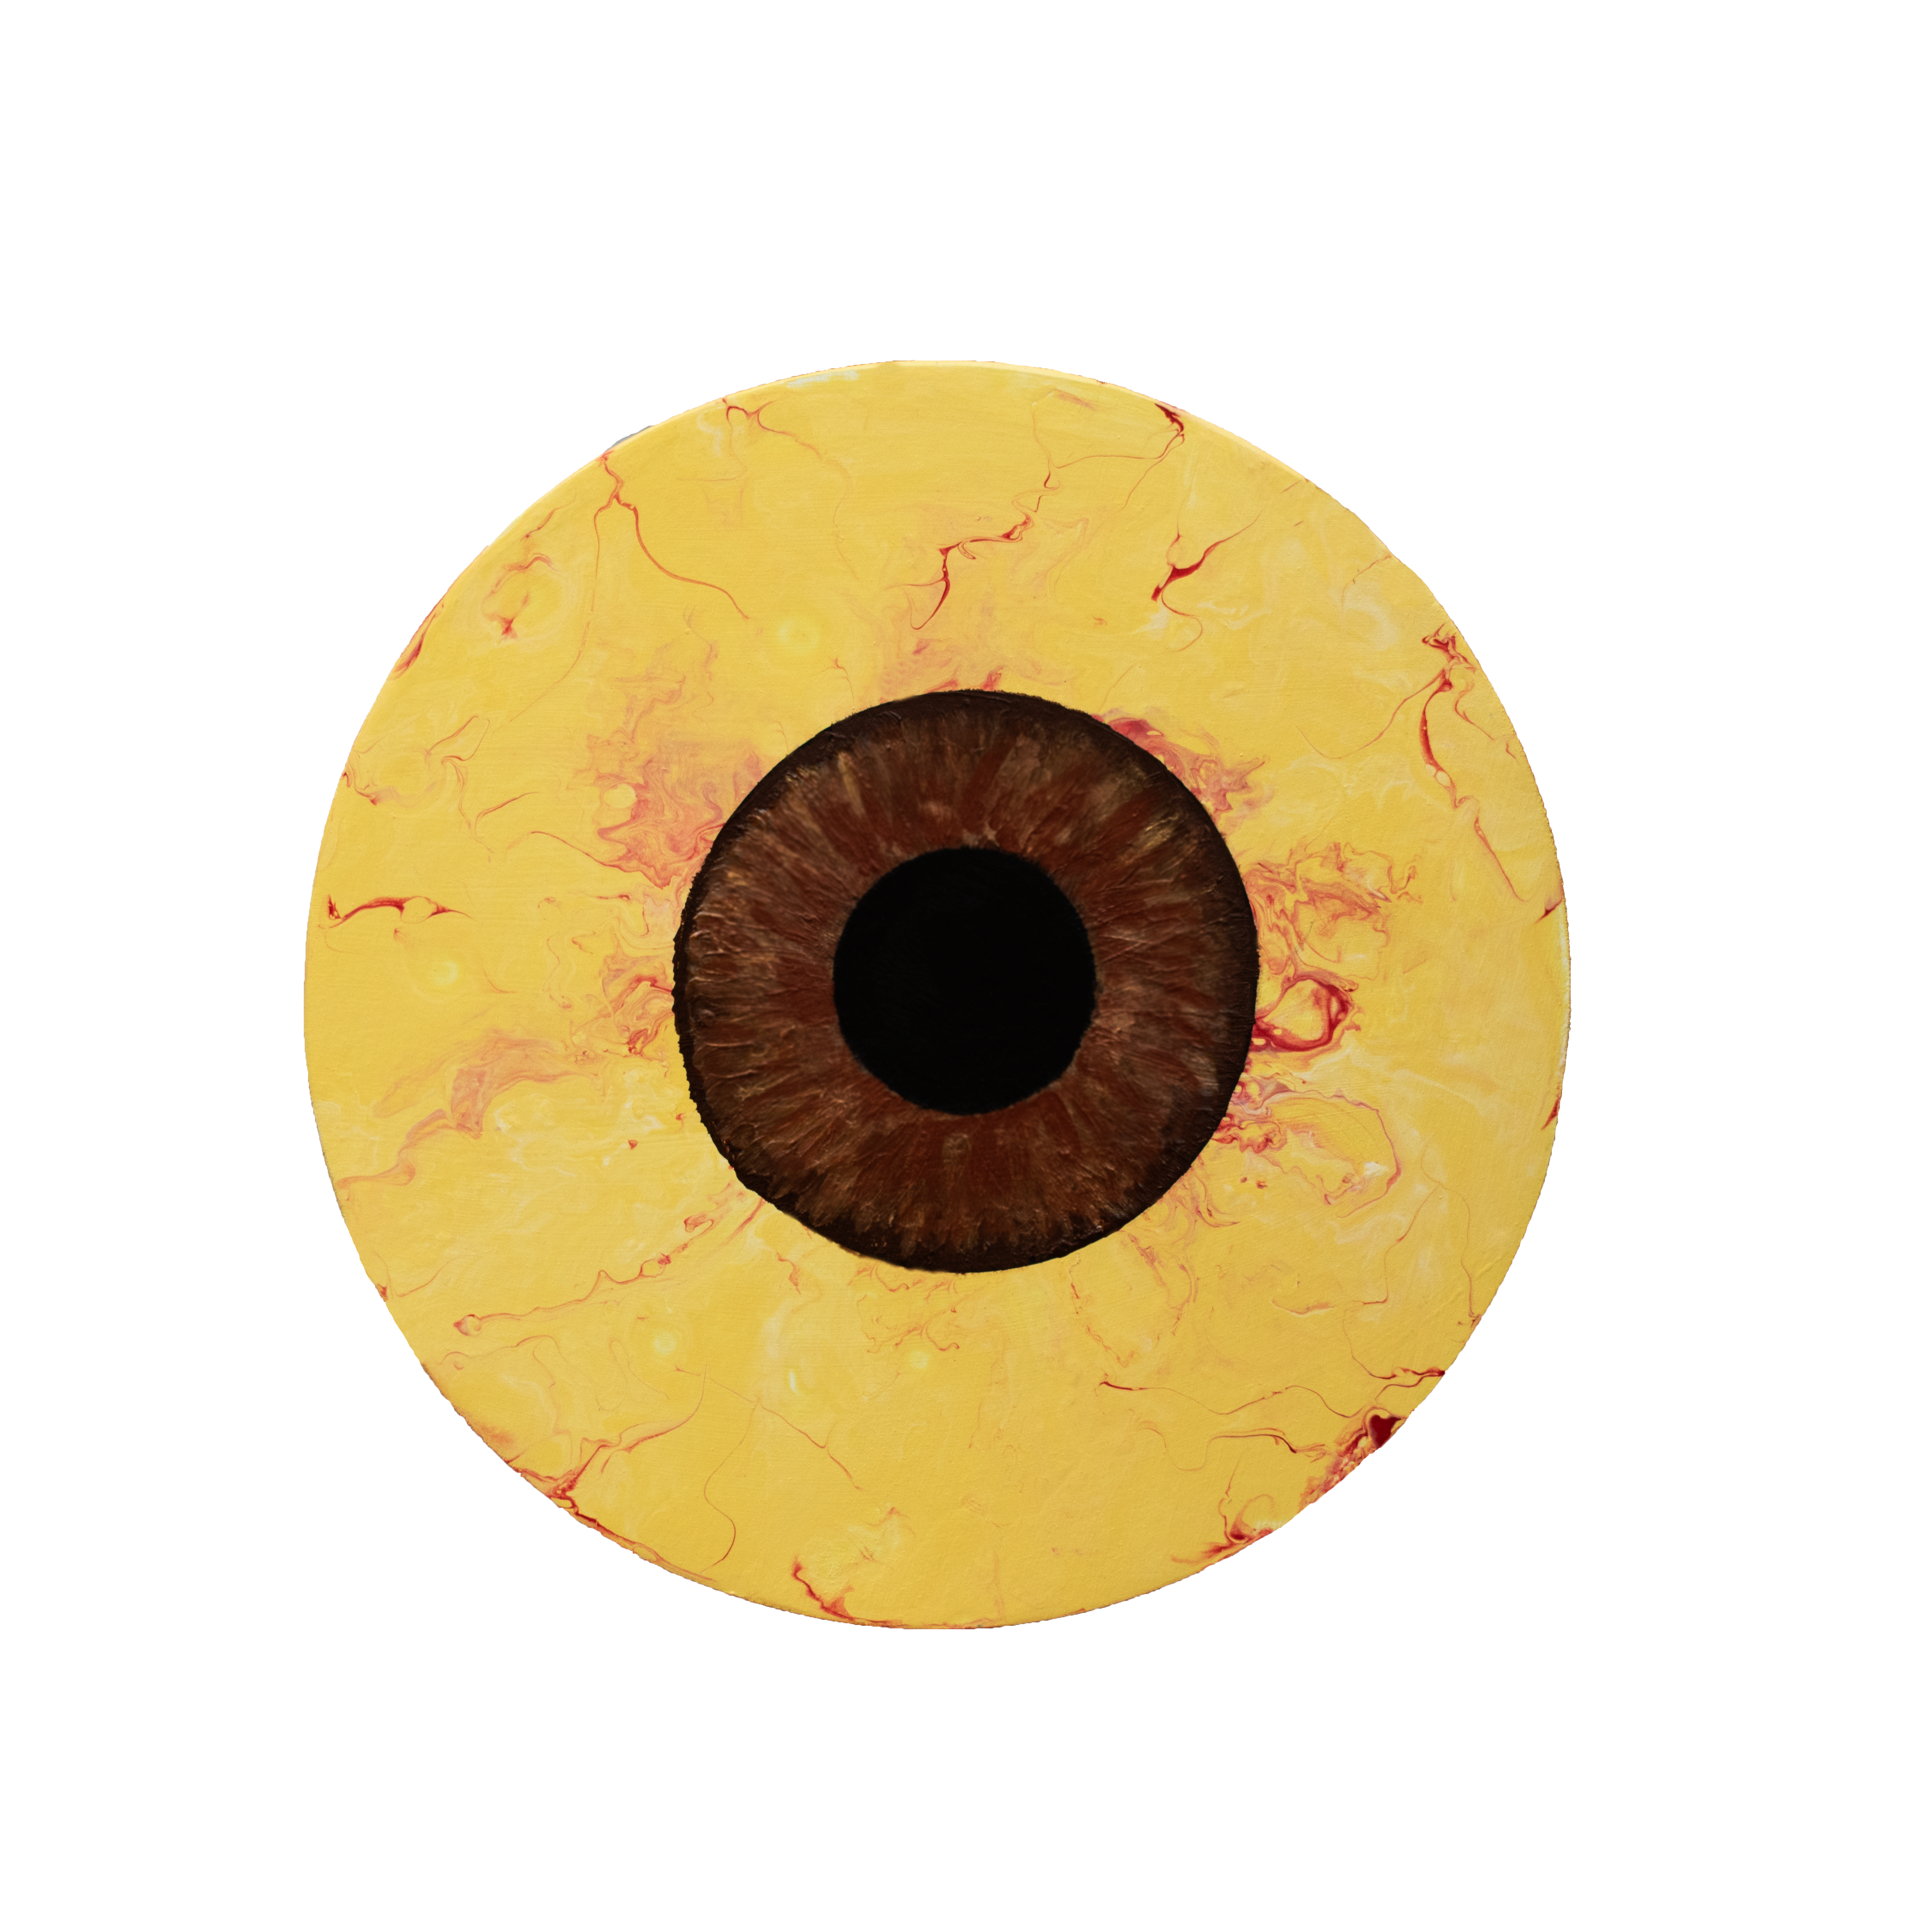 poured painting of jaundiced and yellowed human eyeball